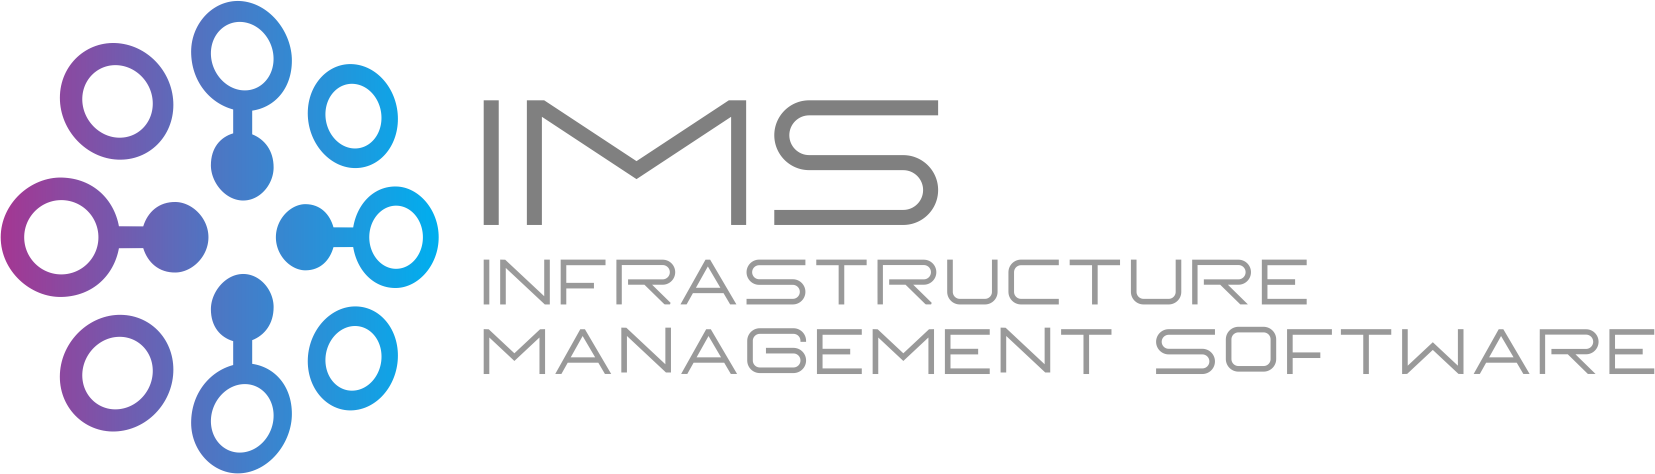 IMS-logo